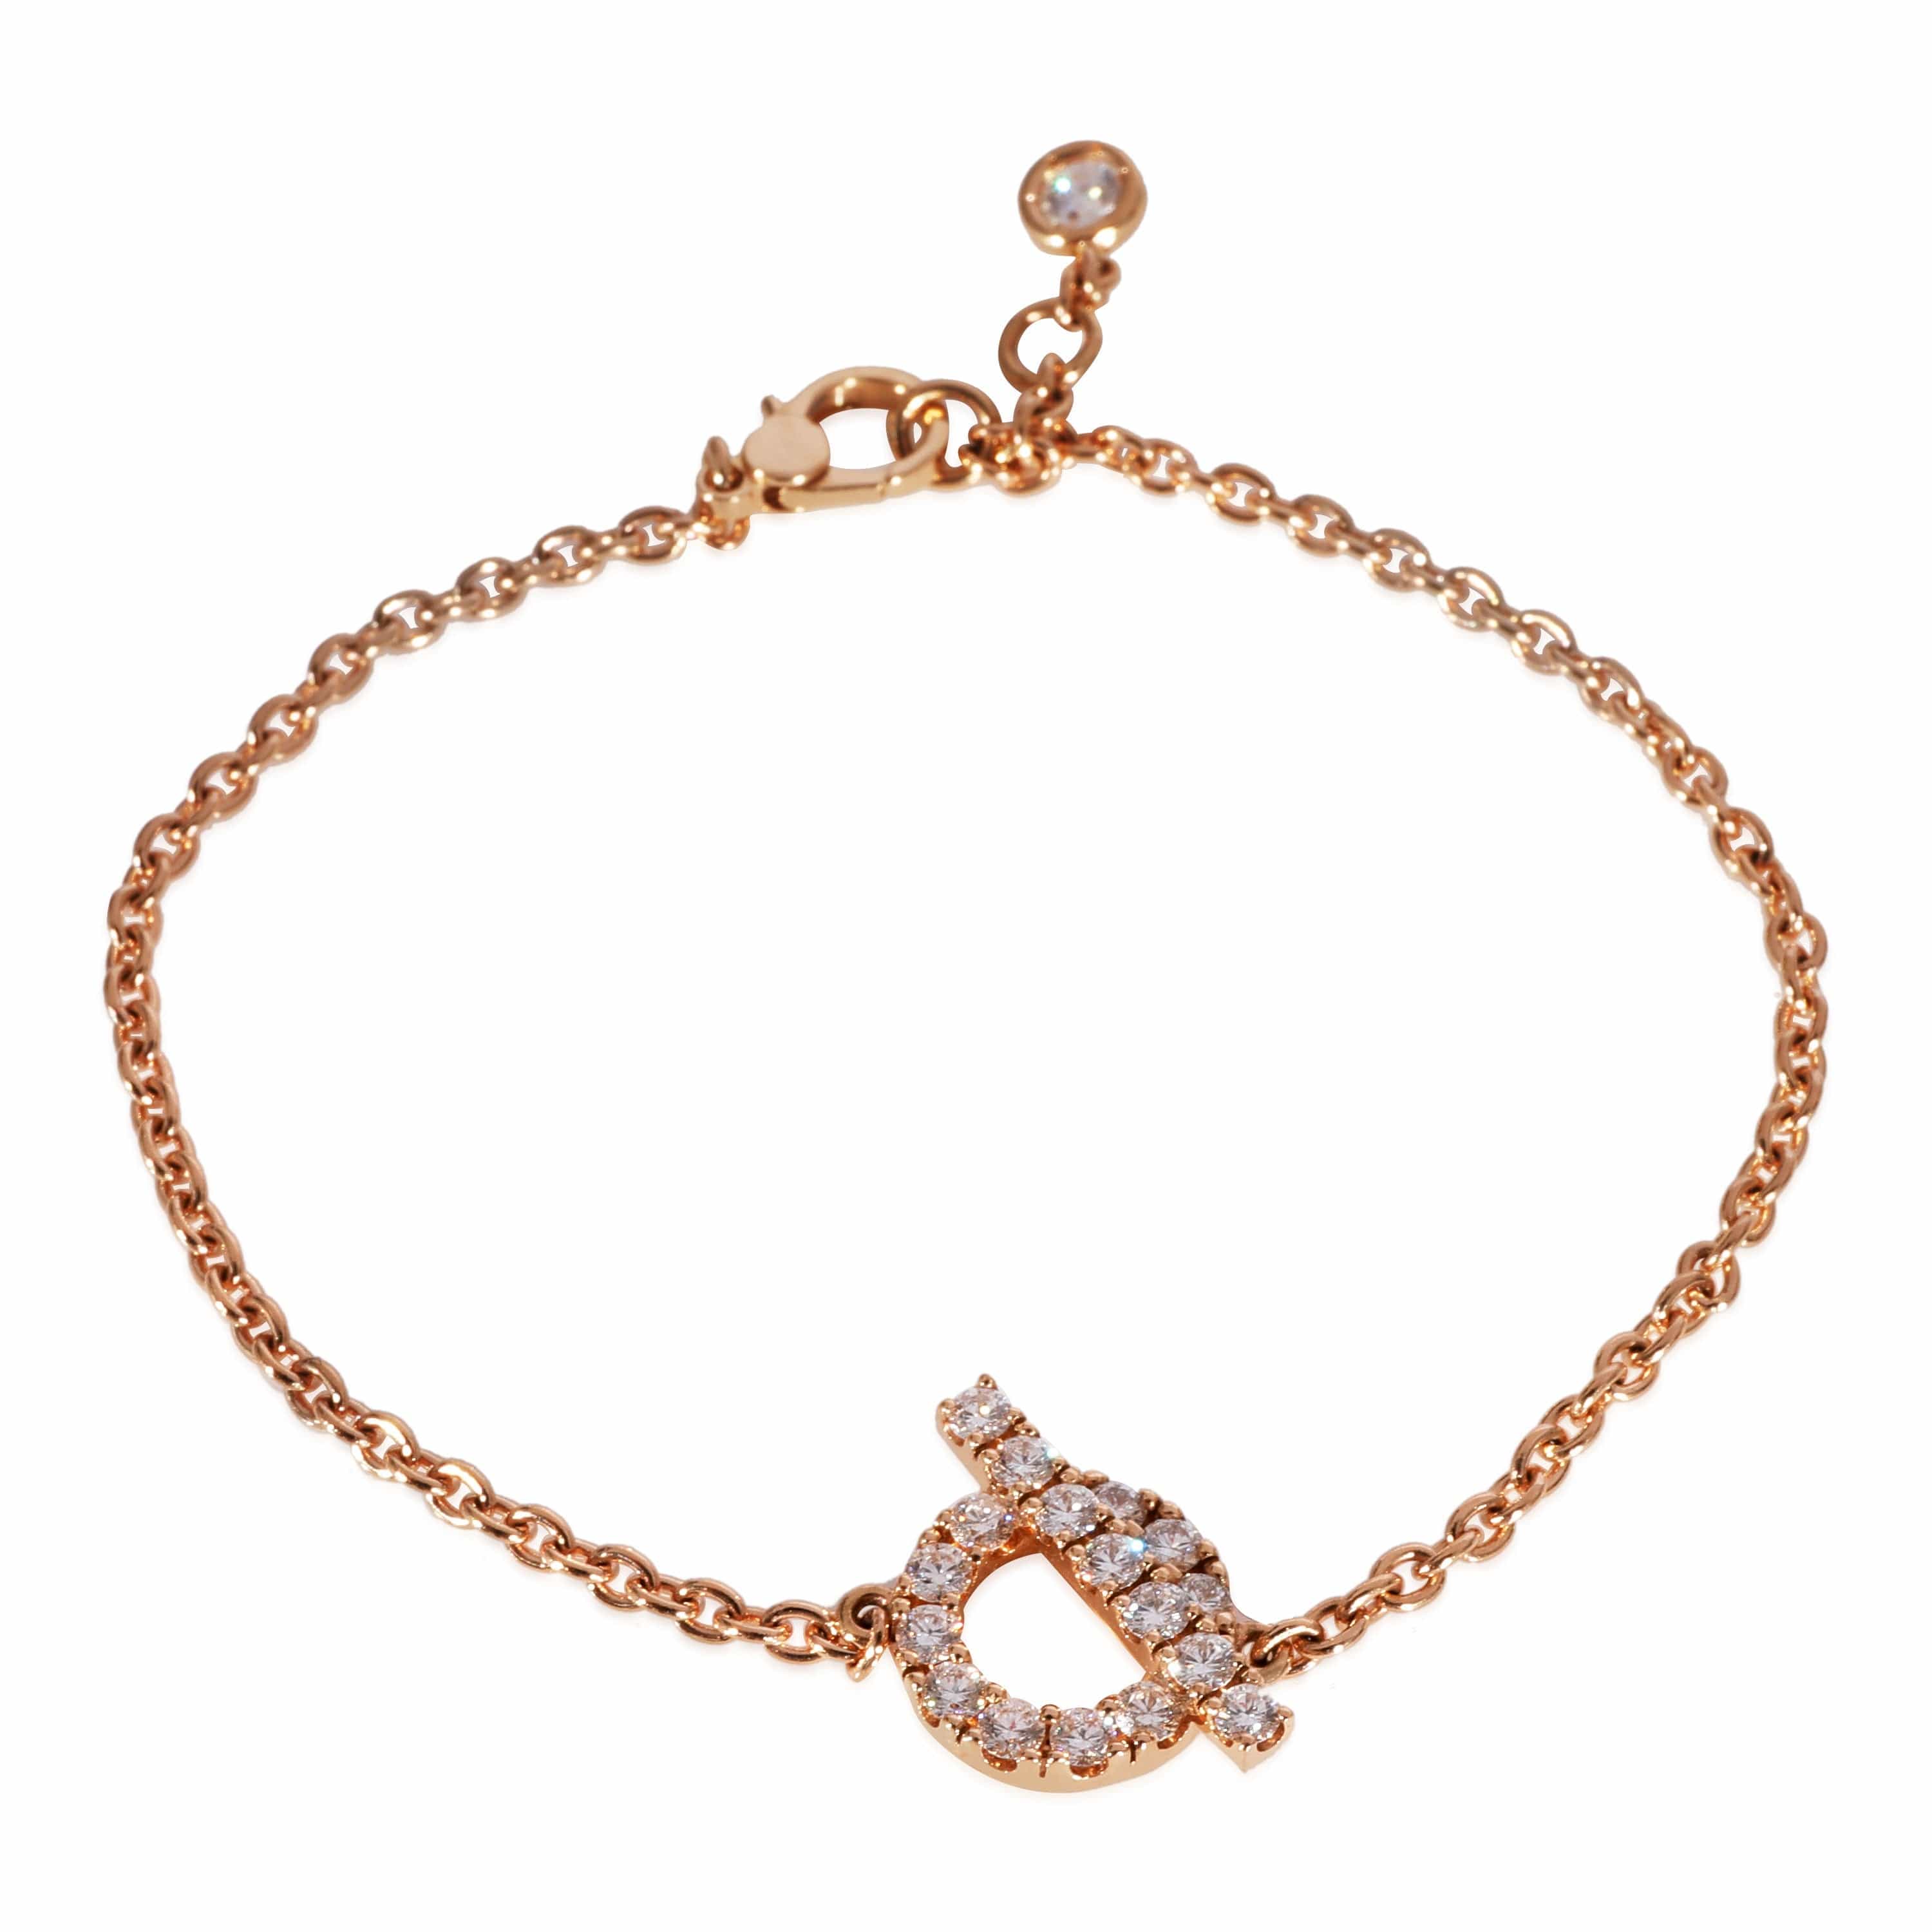 Hermès Hermès Finesse Diamond Bracelet in 18k Rose Gold 0.55 CTW